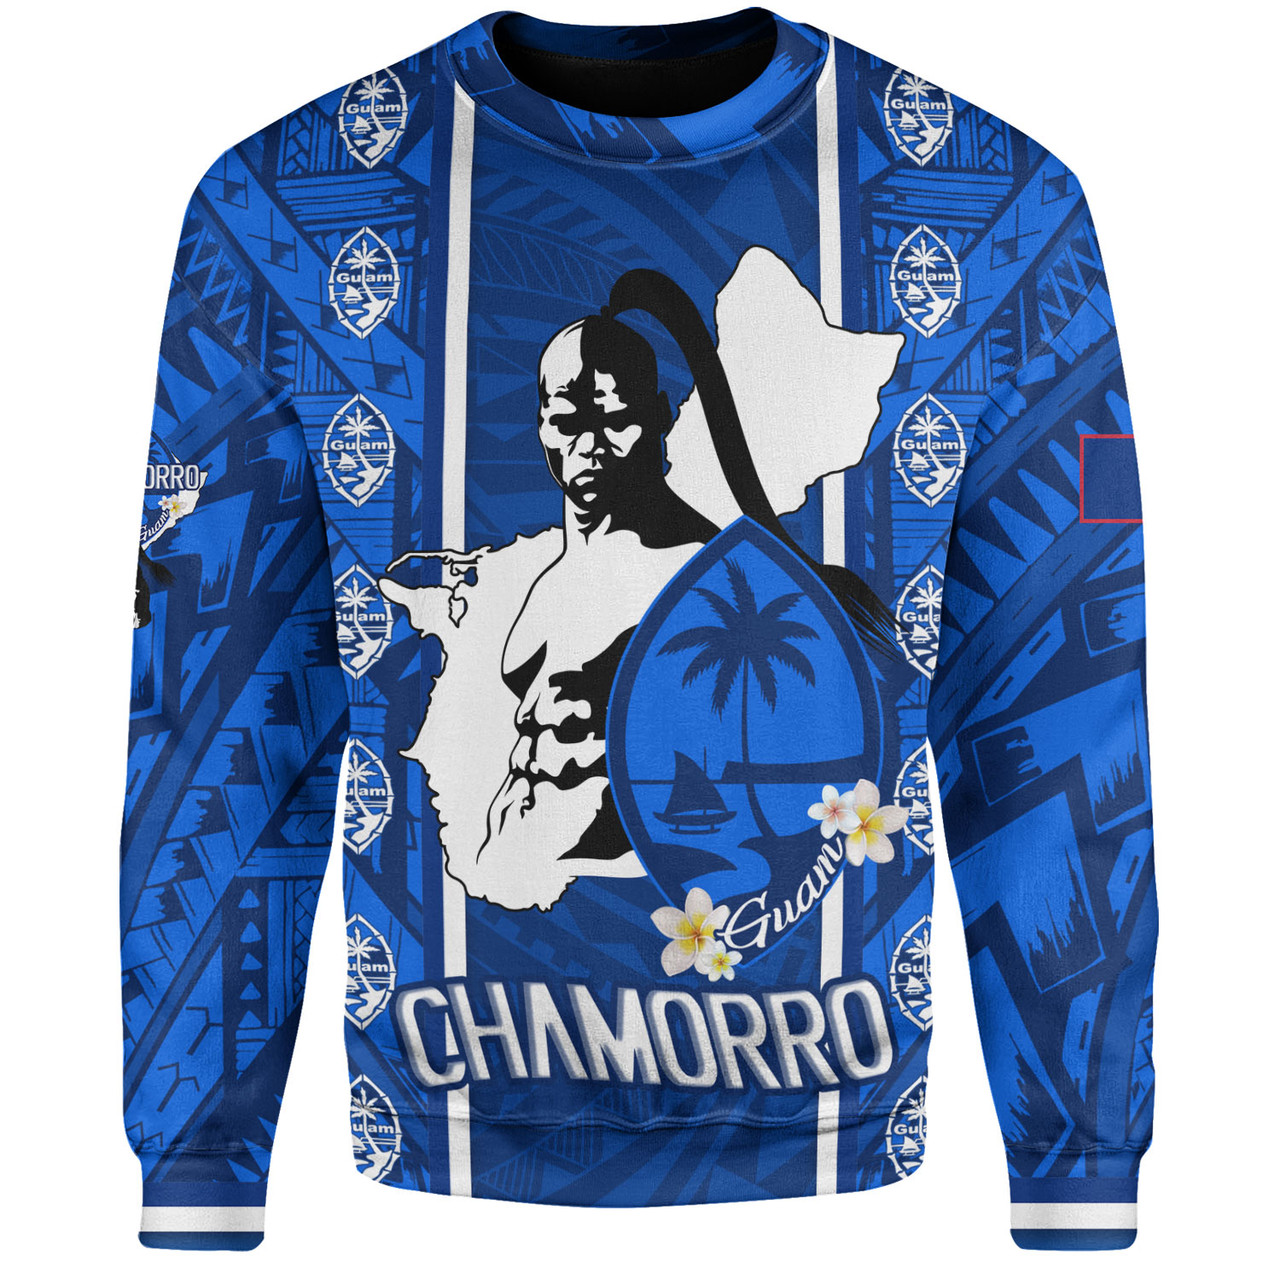 Guam Custom Personalised Sweatshirt Chamorro Warrior Traditional Tribal Patterns